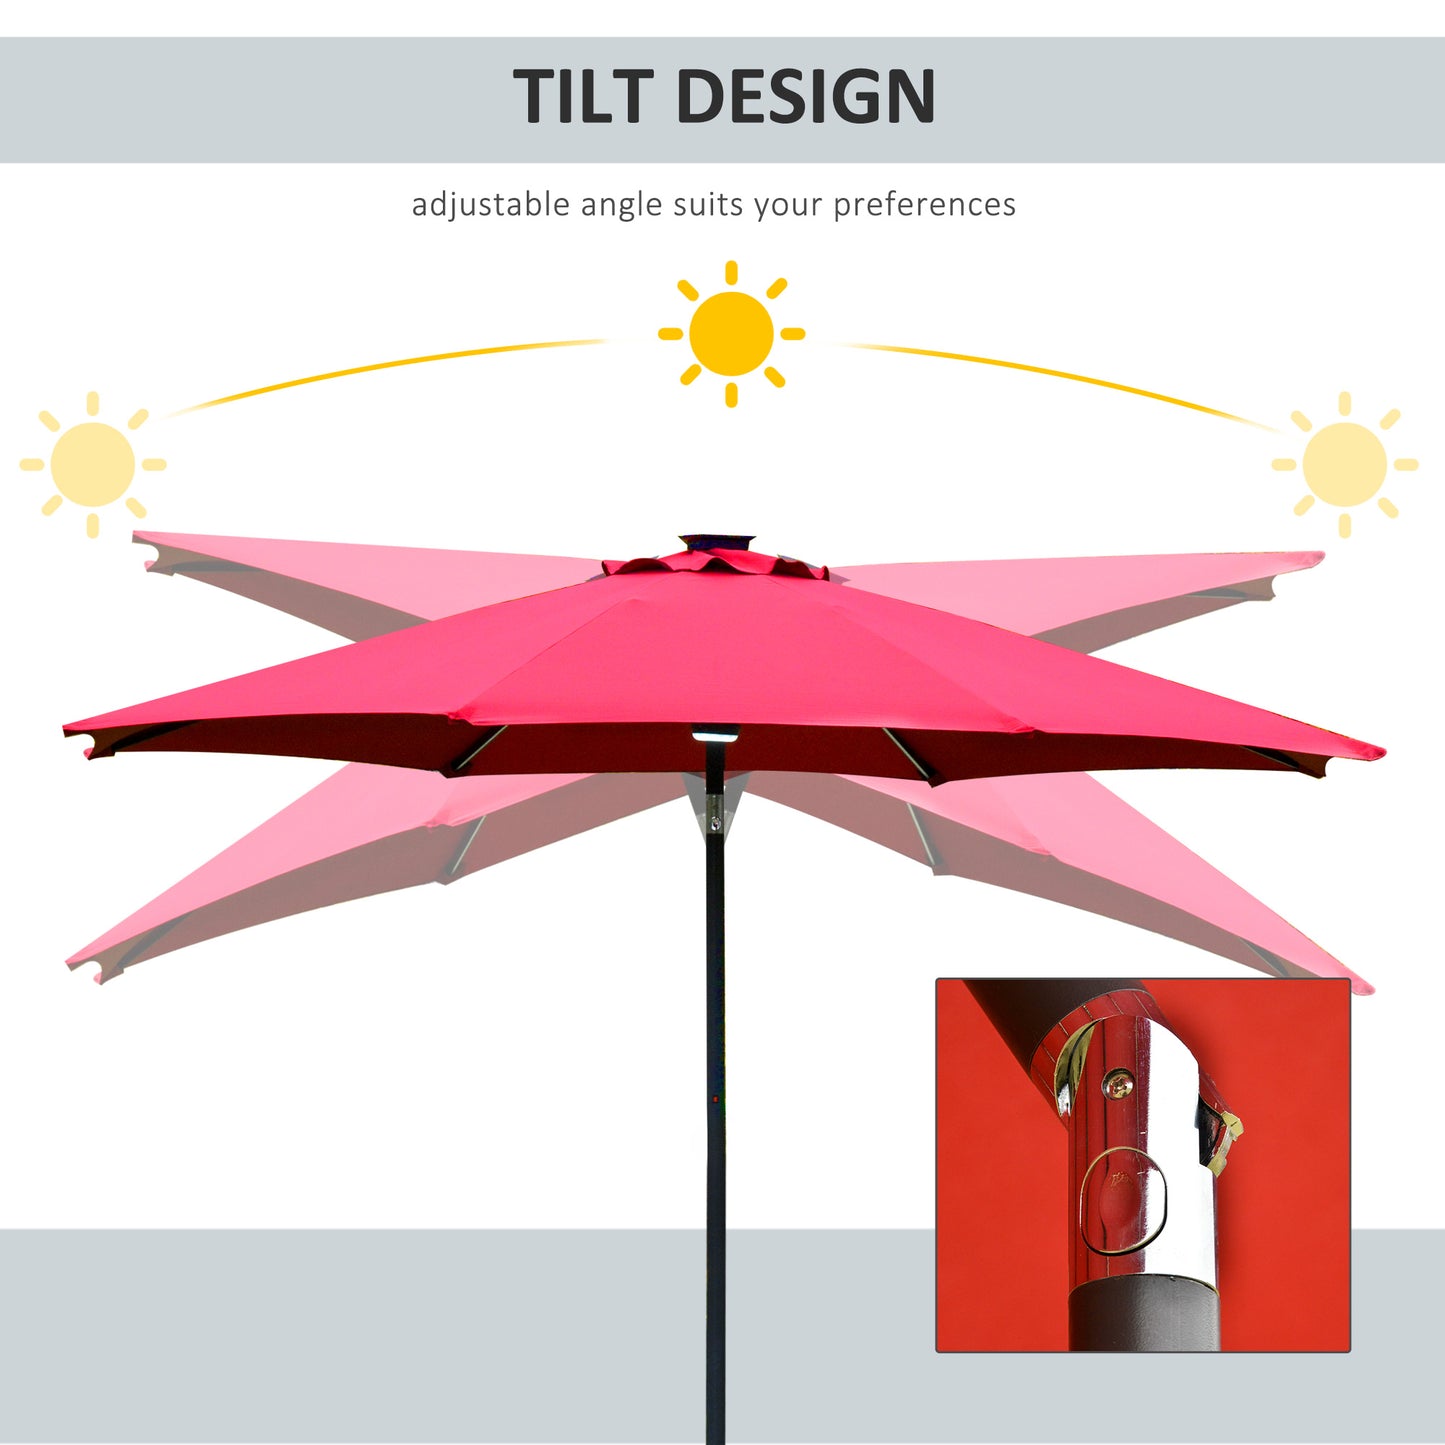 Outsunny 2.7m Garden Parasol Sun Umbrella Patio Summer Shelter w/ LED Solar Light, Angled Canopy, Vent, Crank Tilt, Red Light Canopy